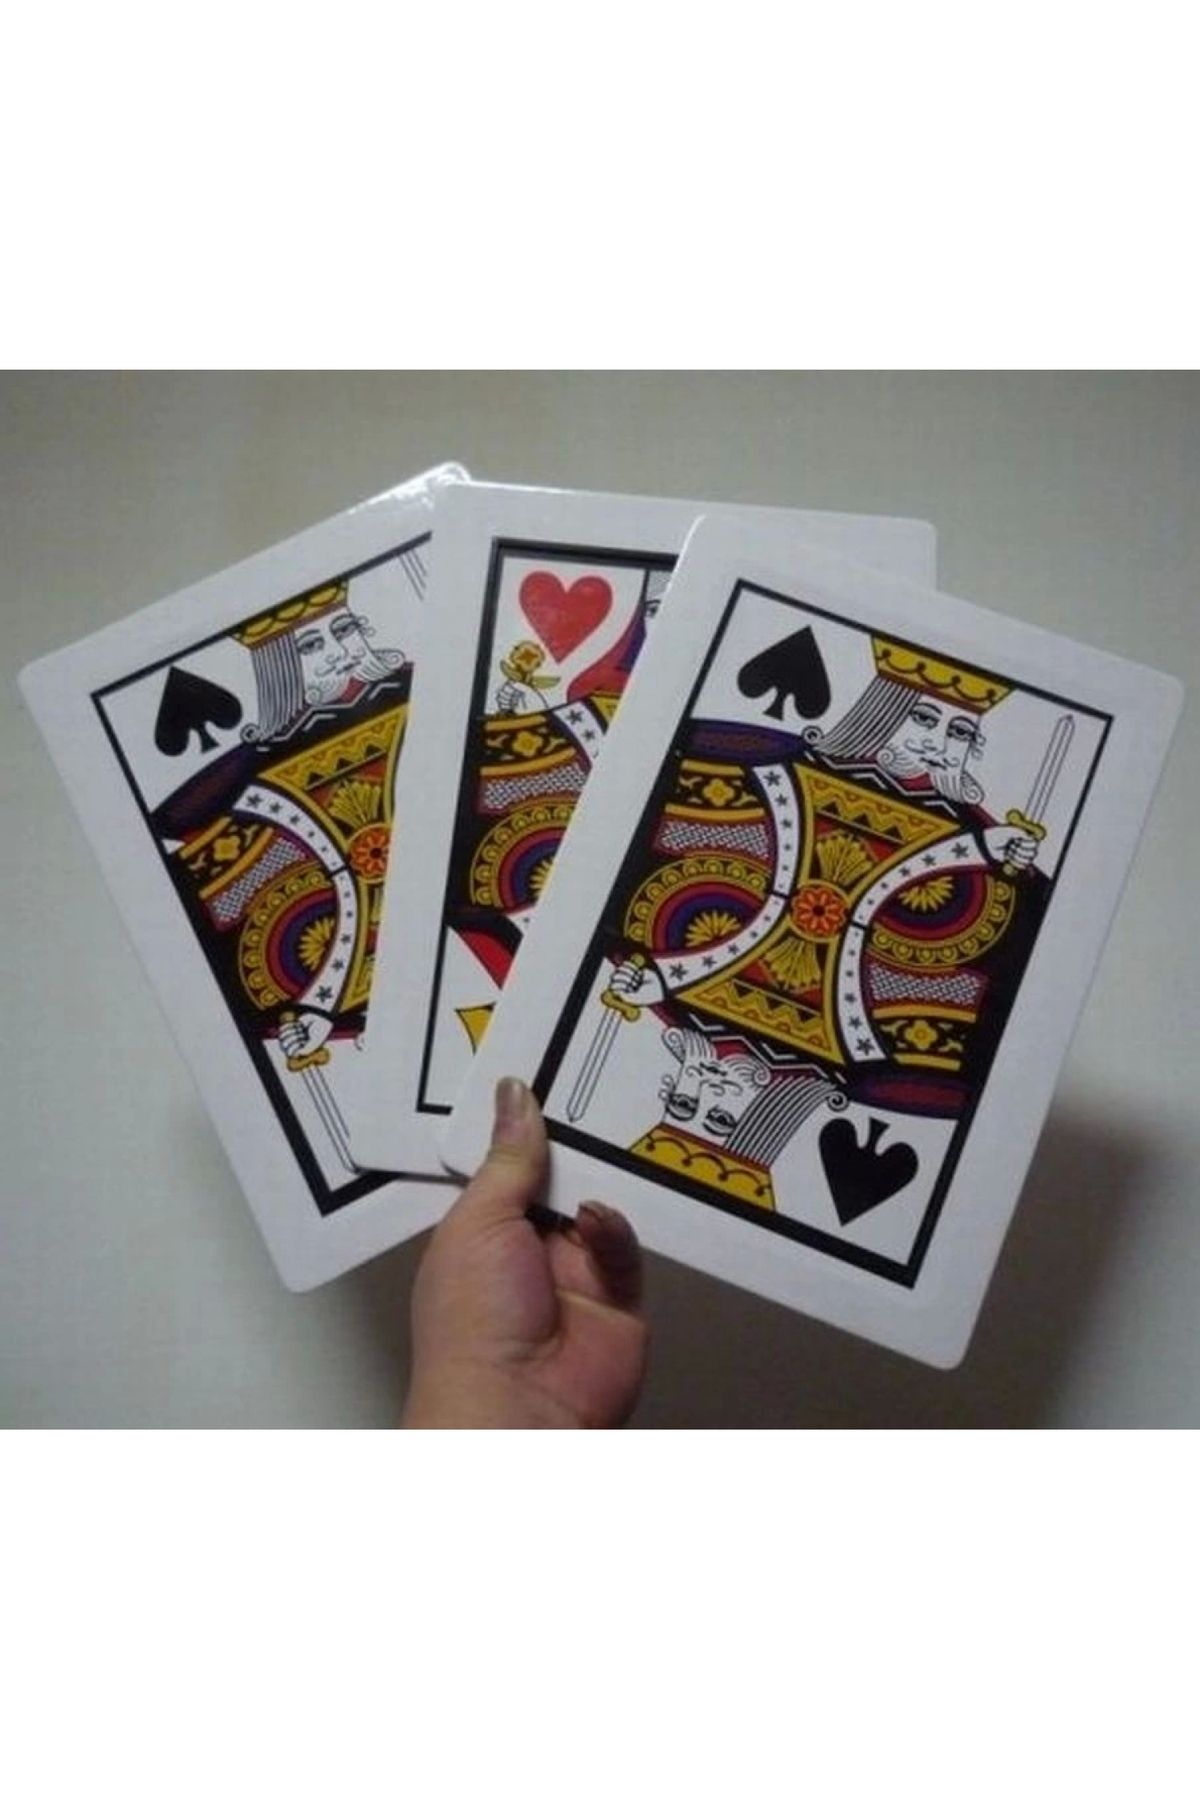 Narnuga Üç Kart Monte Sihirbazlık Oyunu  Basit Etkileyici sihirbazlık oyunu 0040- 3 Kart Fiyatı